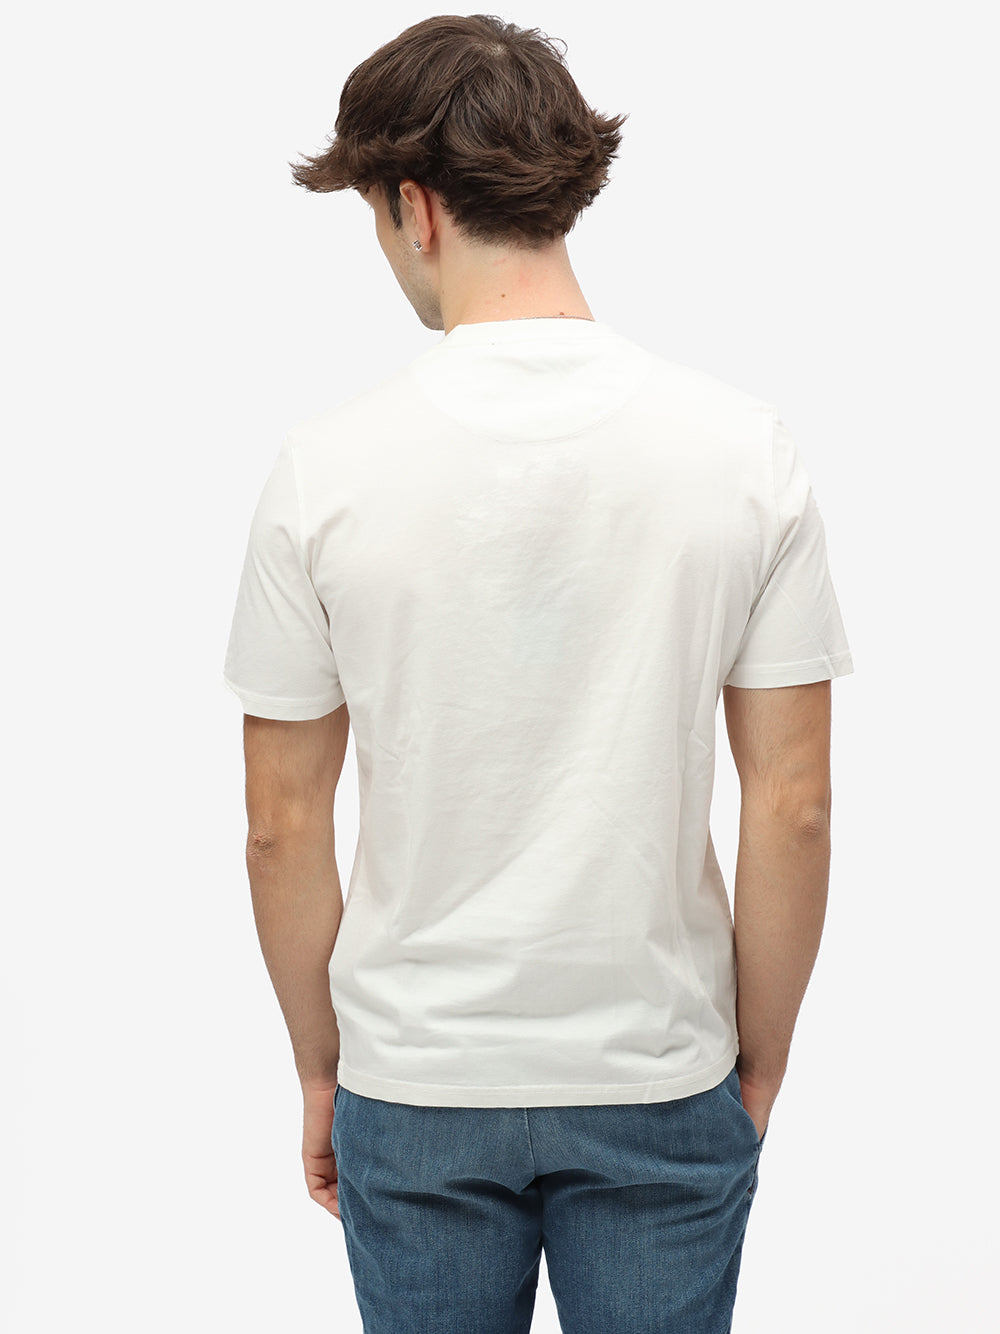 Ciesse Piumini T-Shirt Uomo Polt 2.0-Bianco